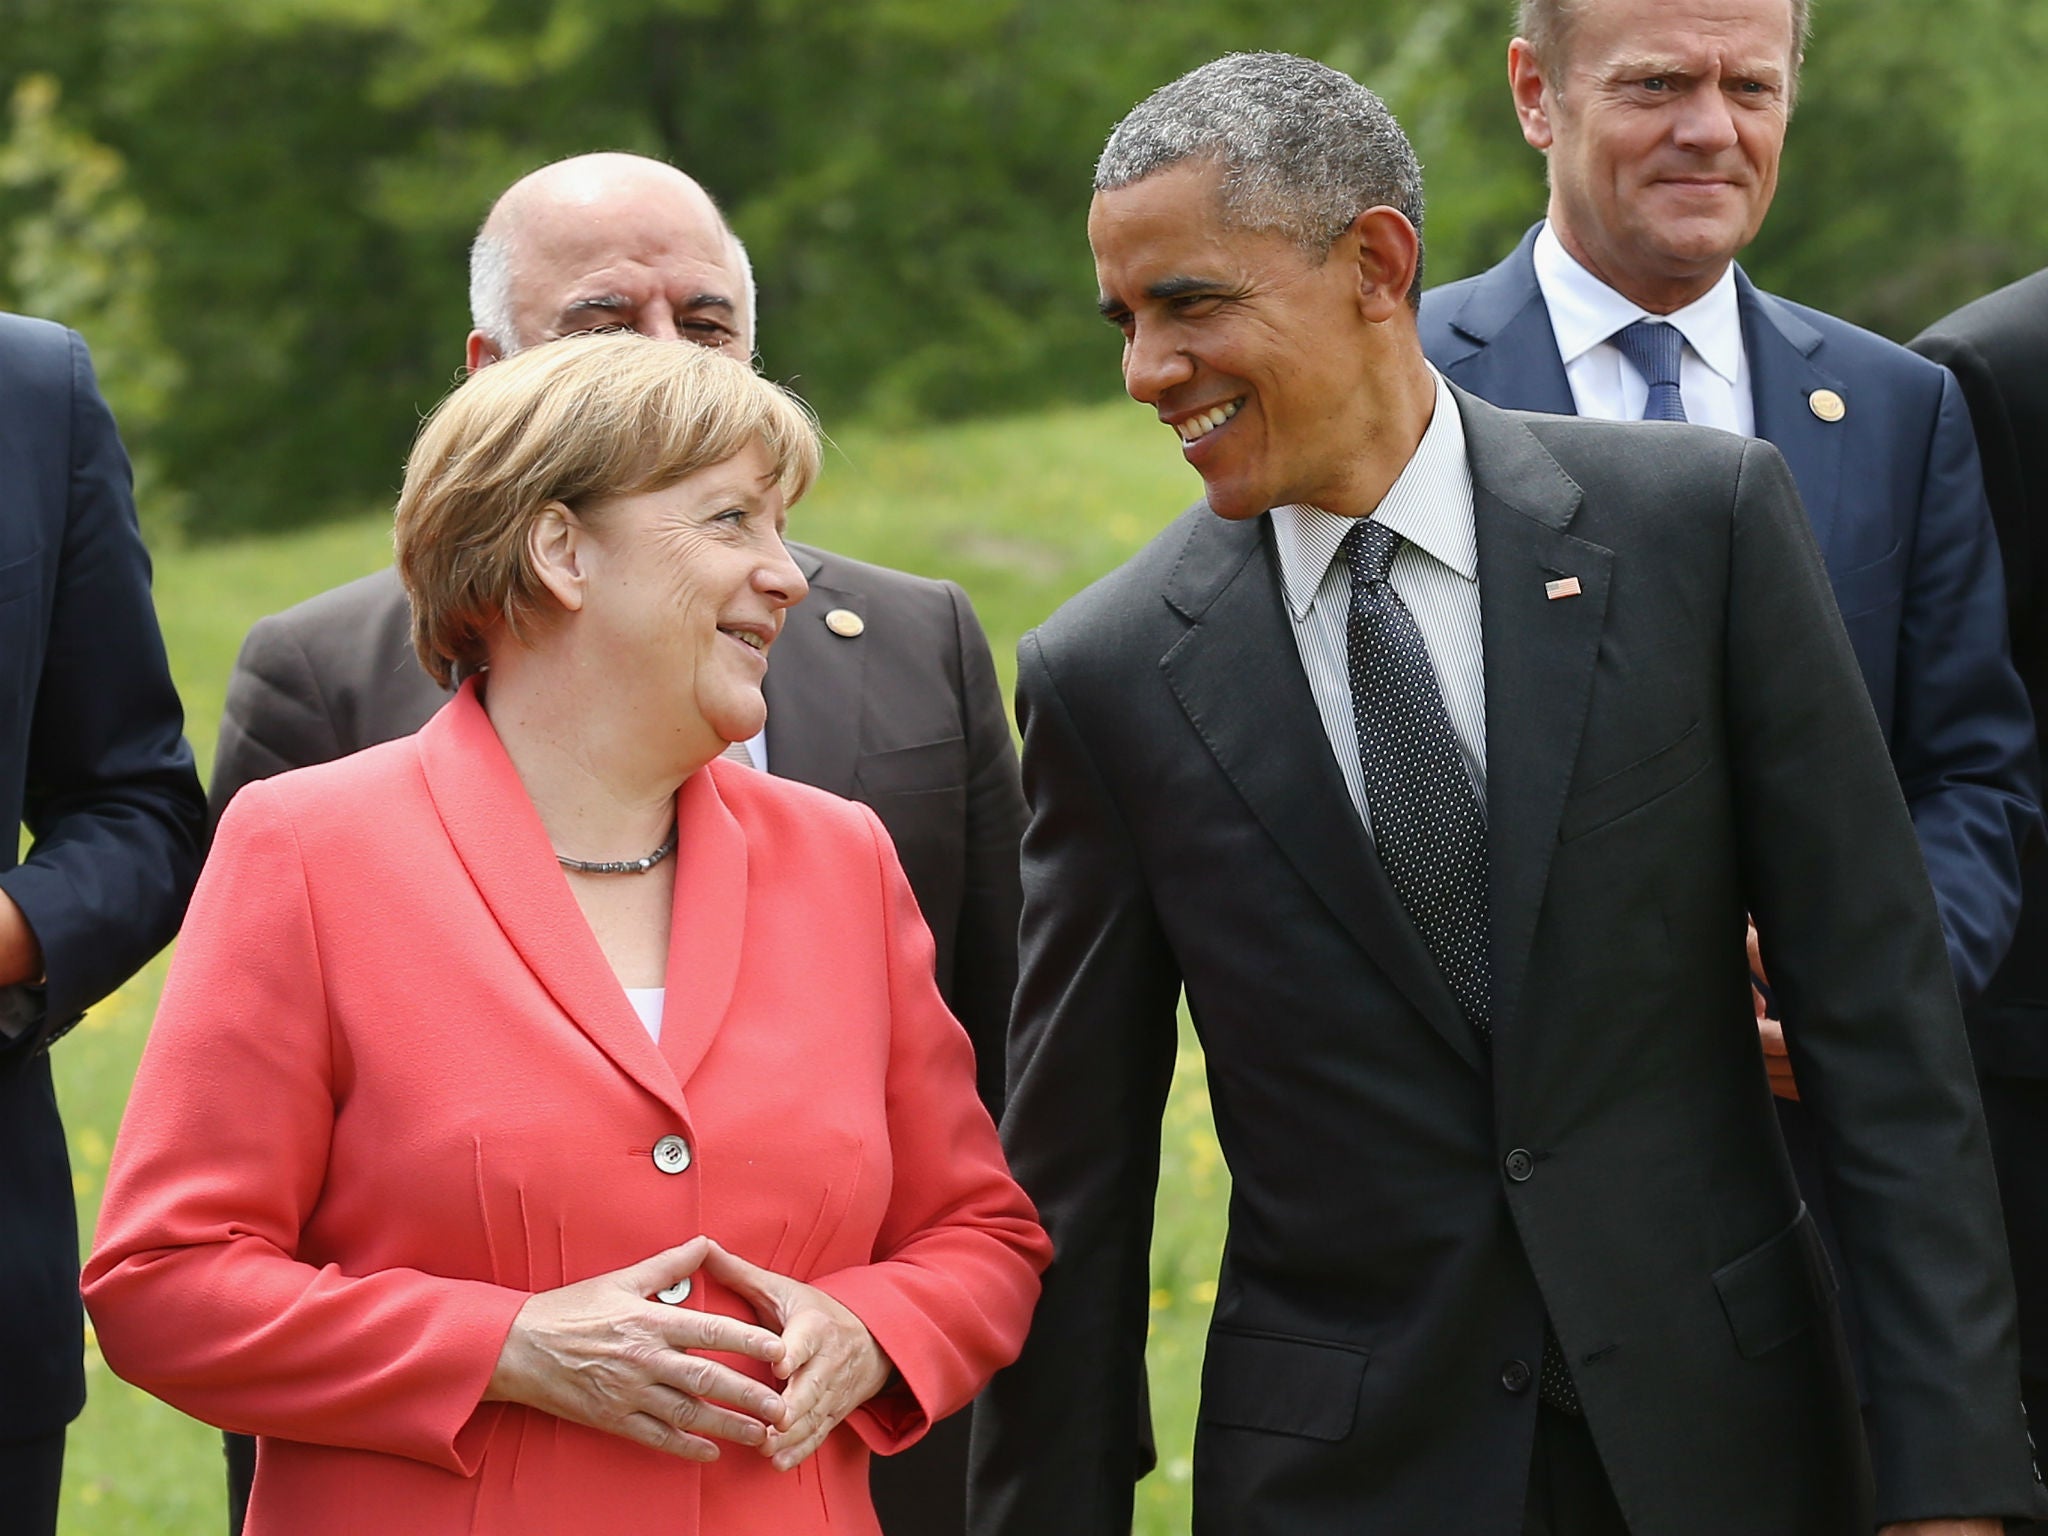 Barack Obama with Angela Merkel, the German Chancellor